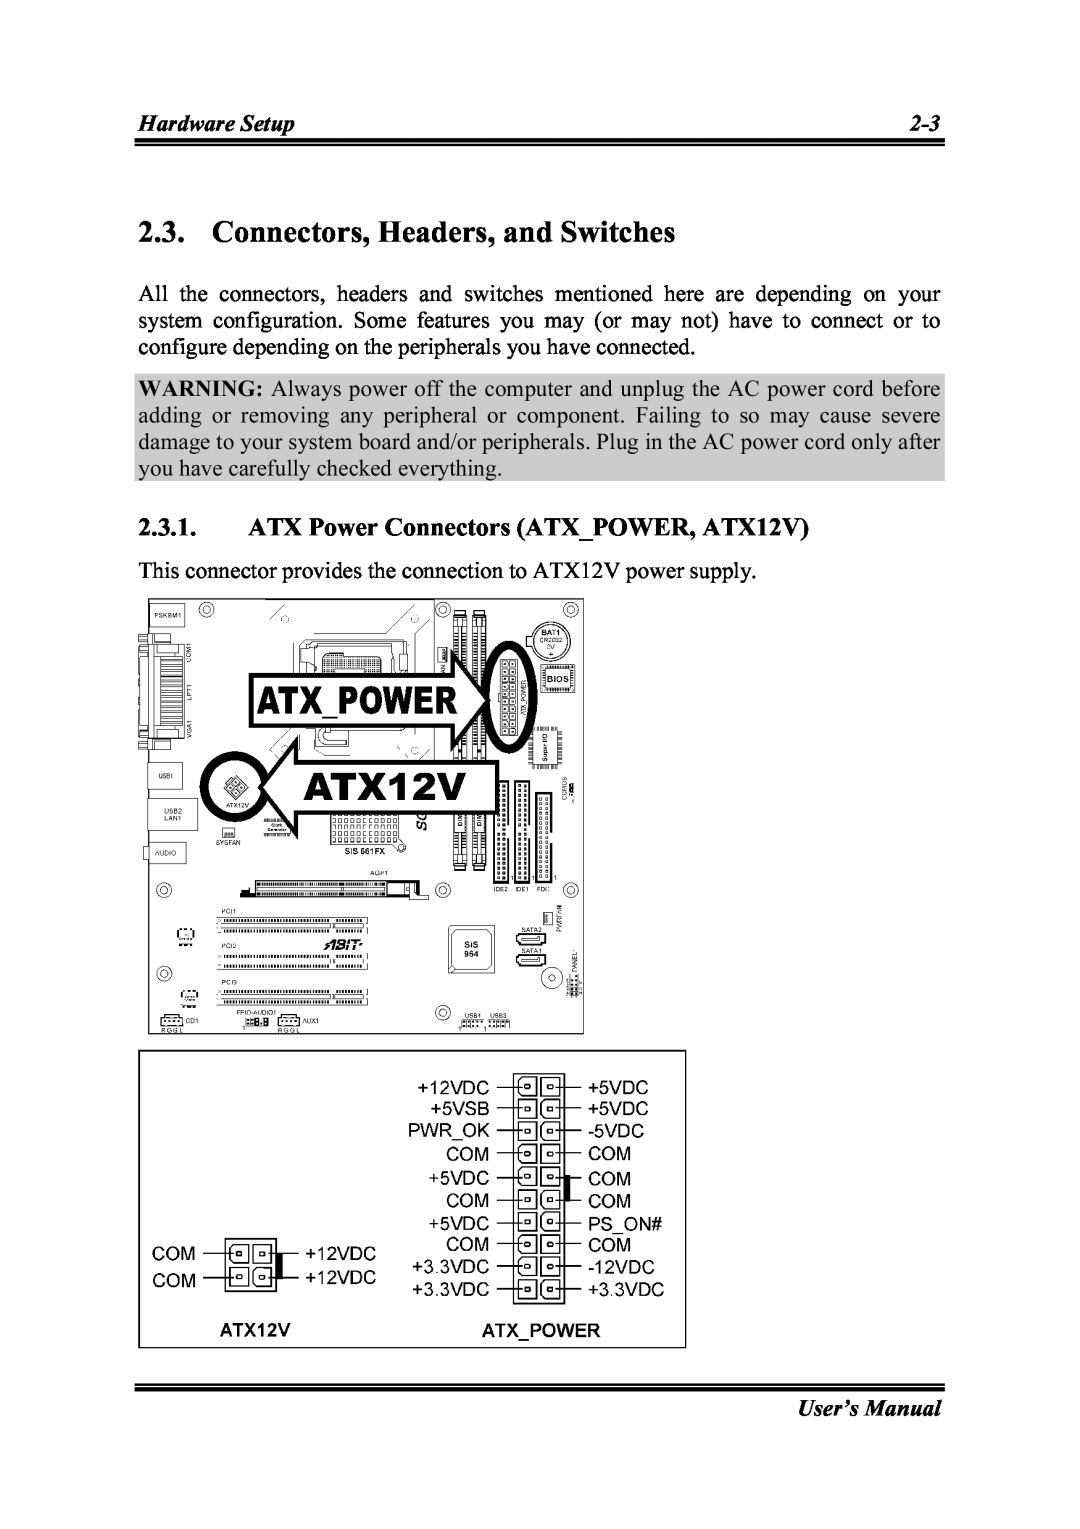 Intel SG-81, SG-80 user manual Connectors, Headers, and Switches, ATX Power Connectors ATX_POWER, ATX12V 